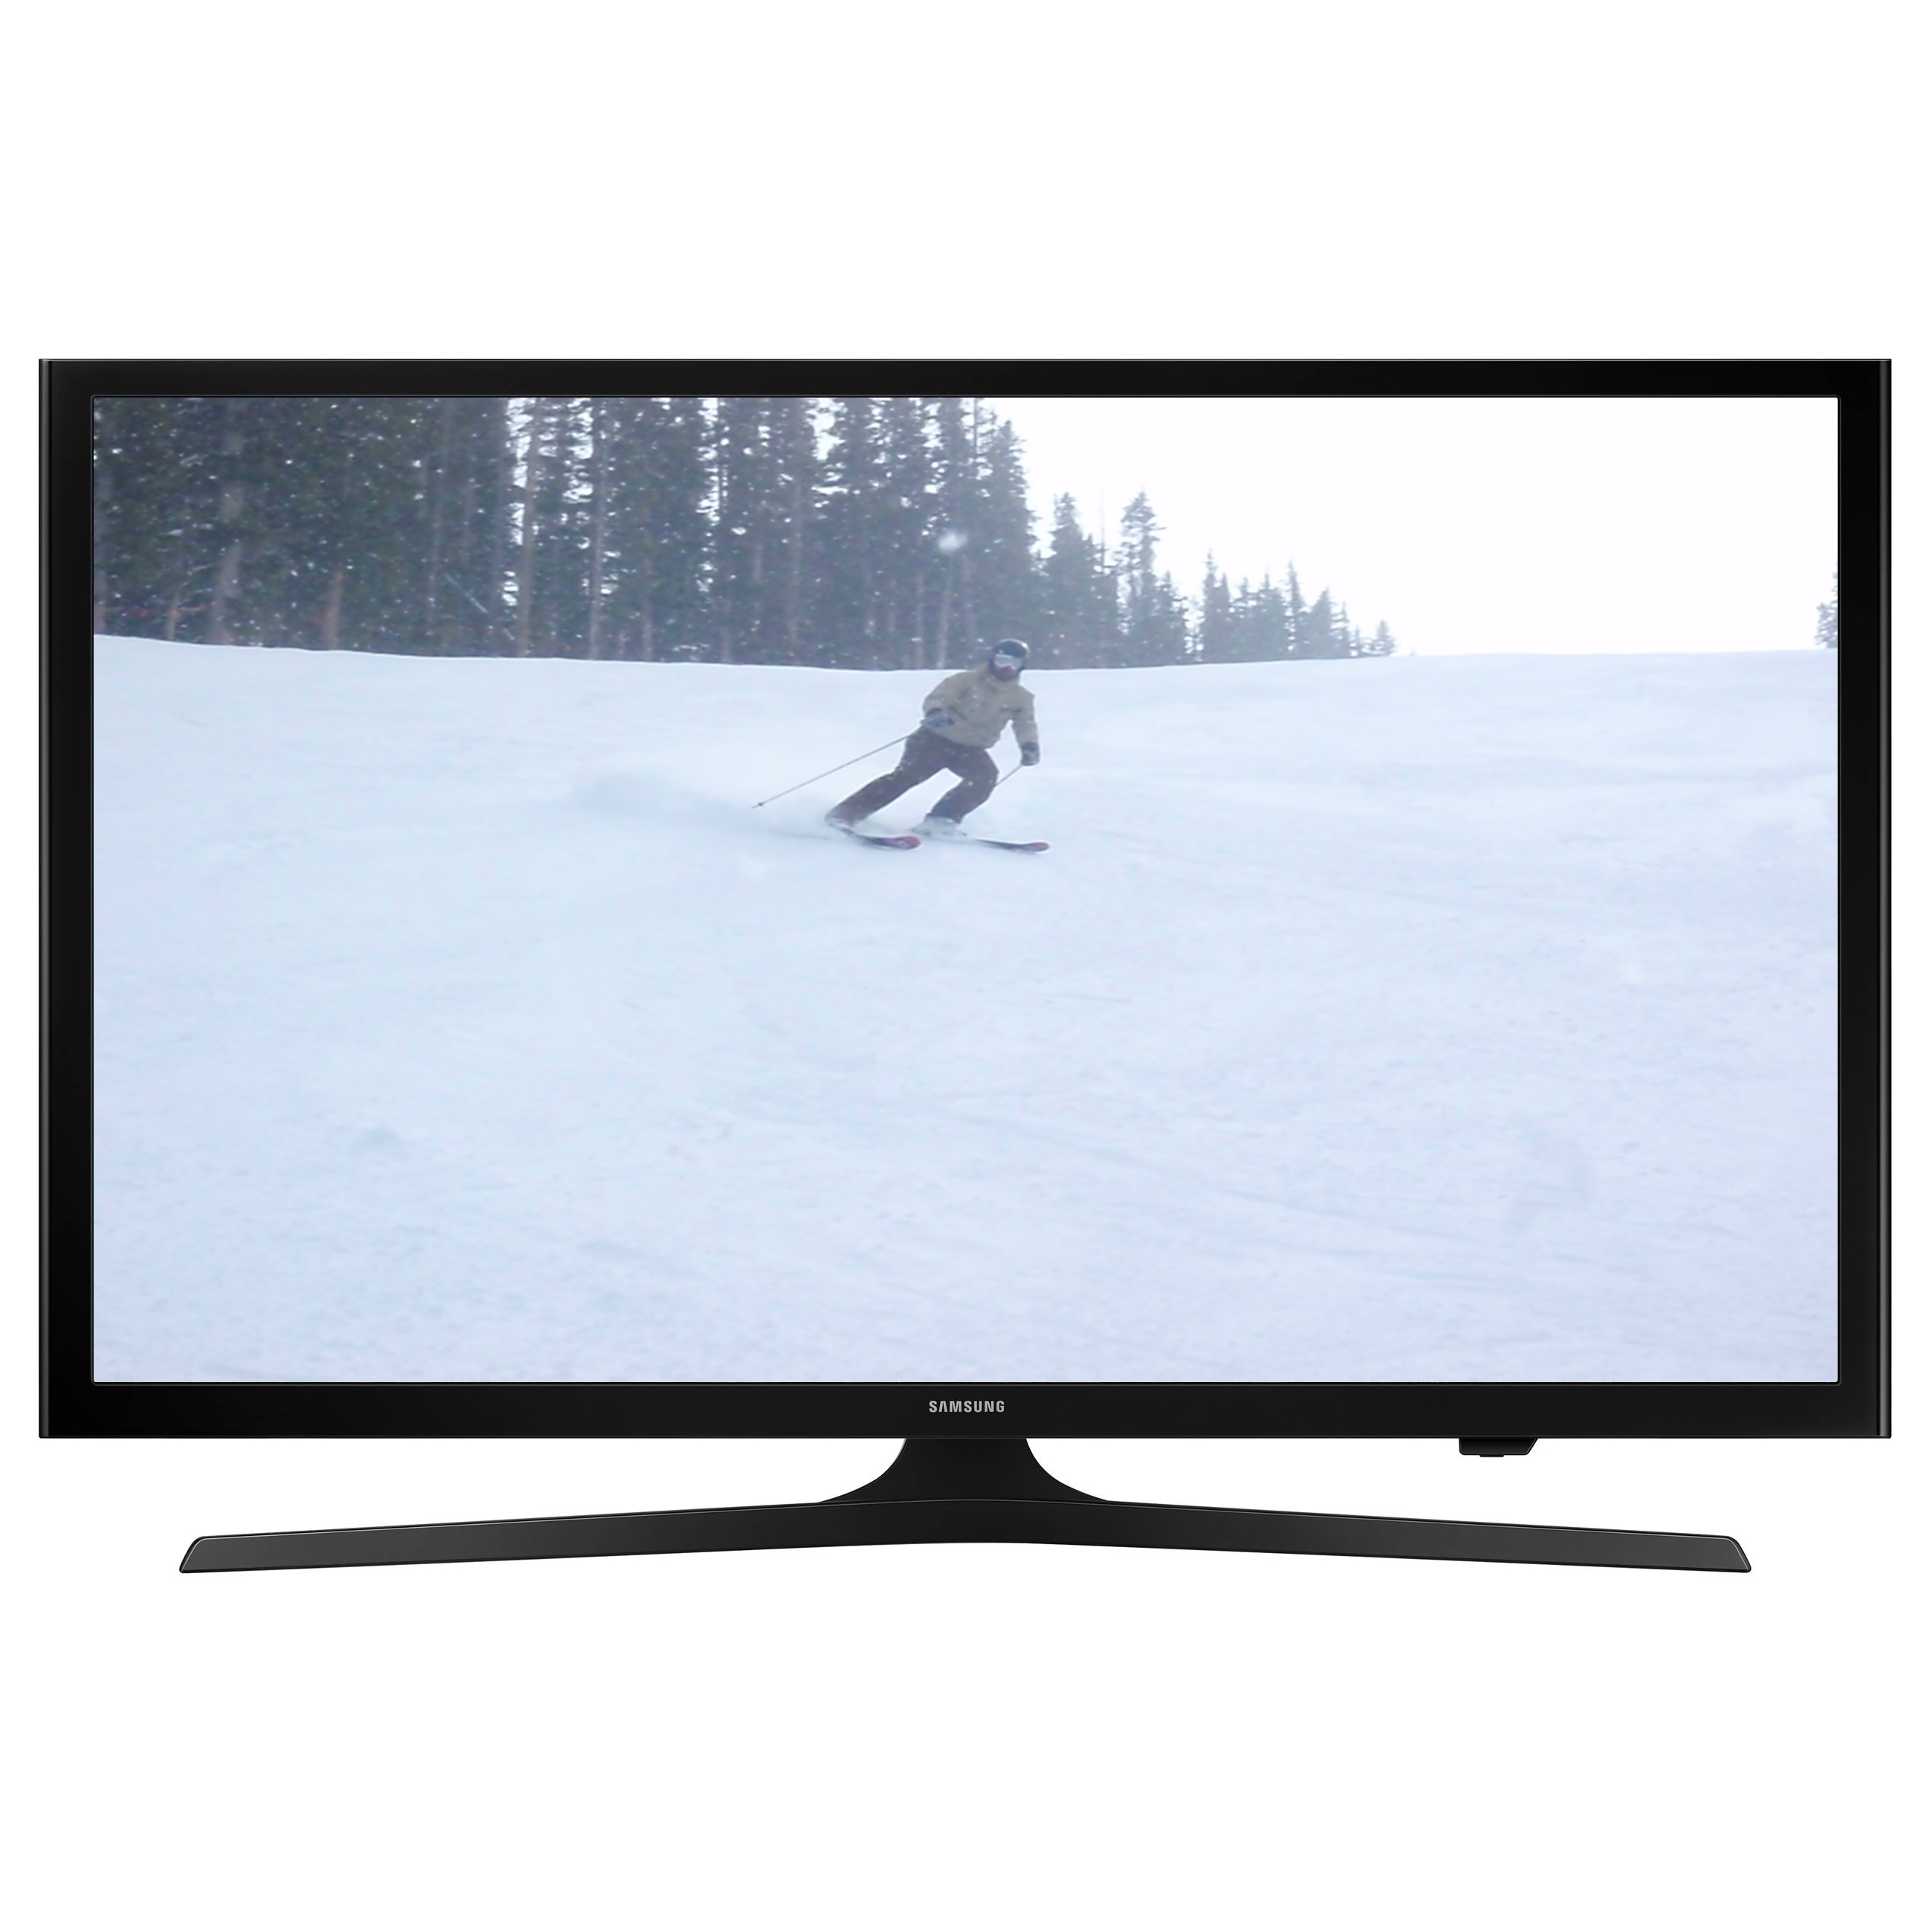 Samsung REFURBISHED40 IN. 1080P SMART LED HDTV W/ WIFI-UN40J5200AFXZA